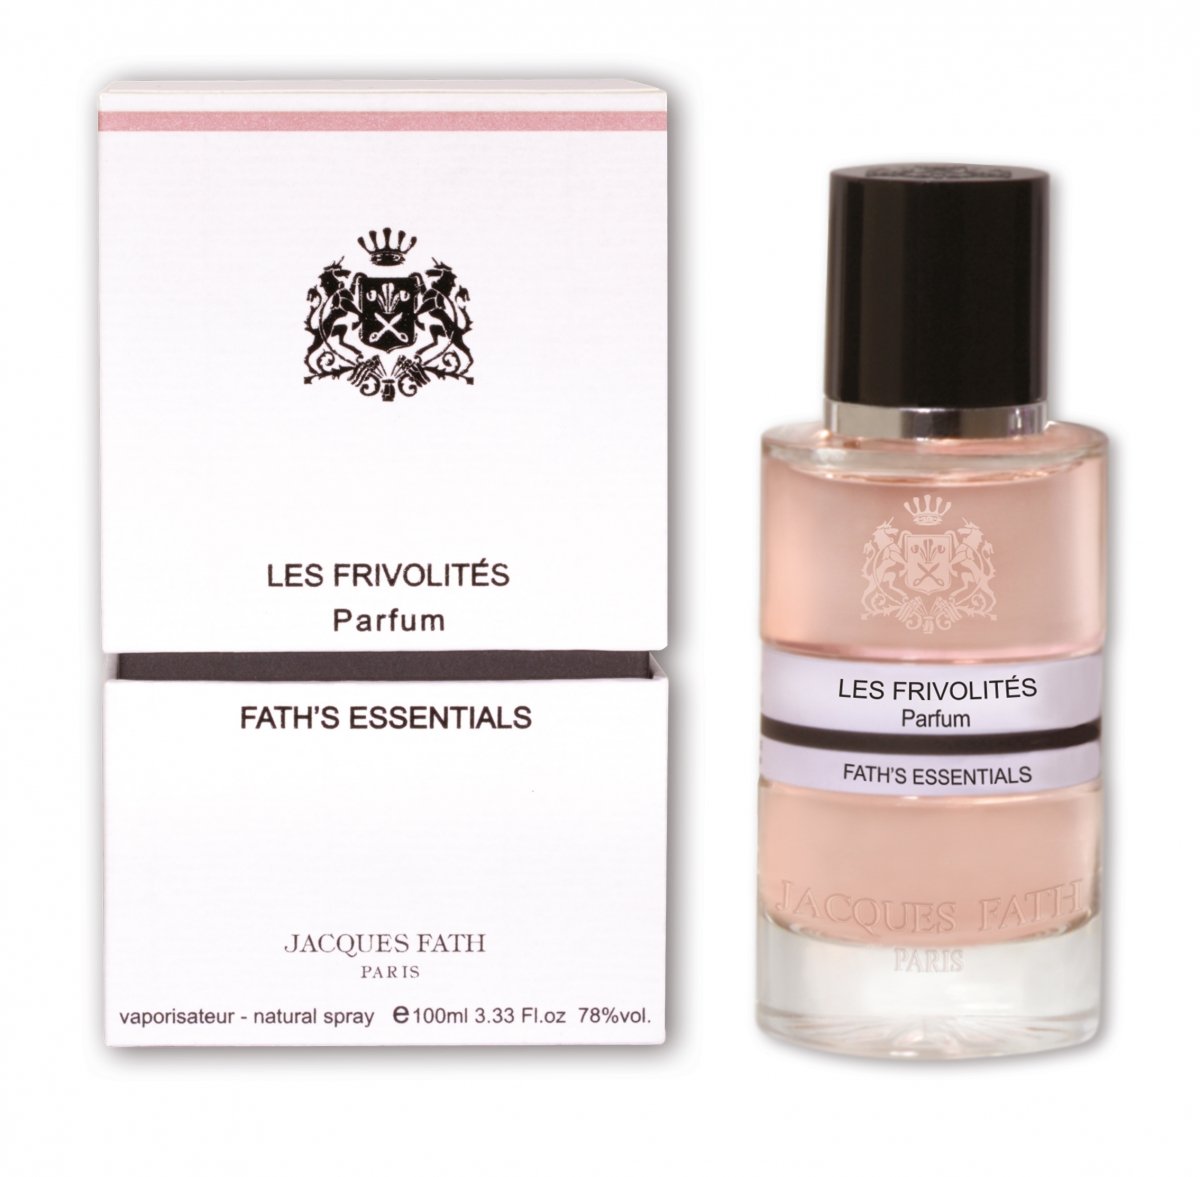 Les Frivolites perfume image